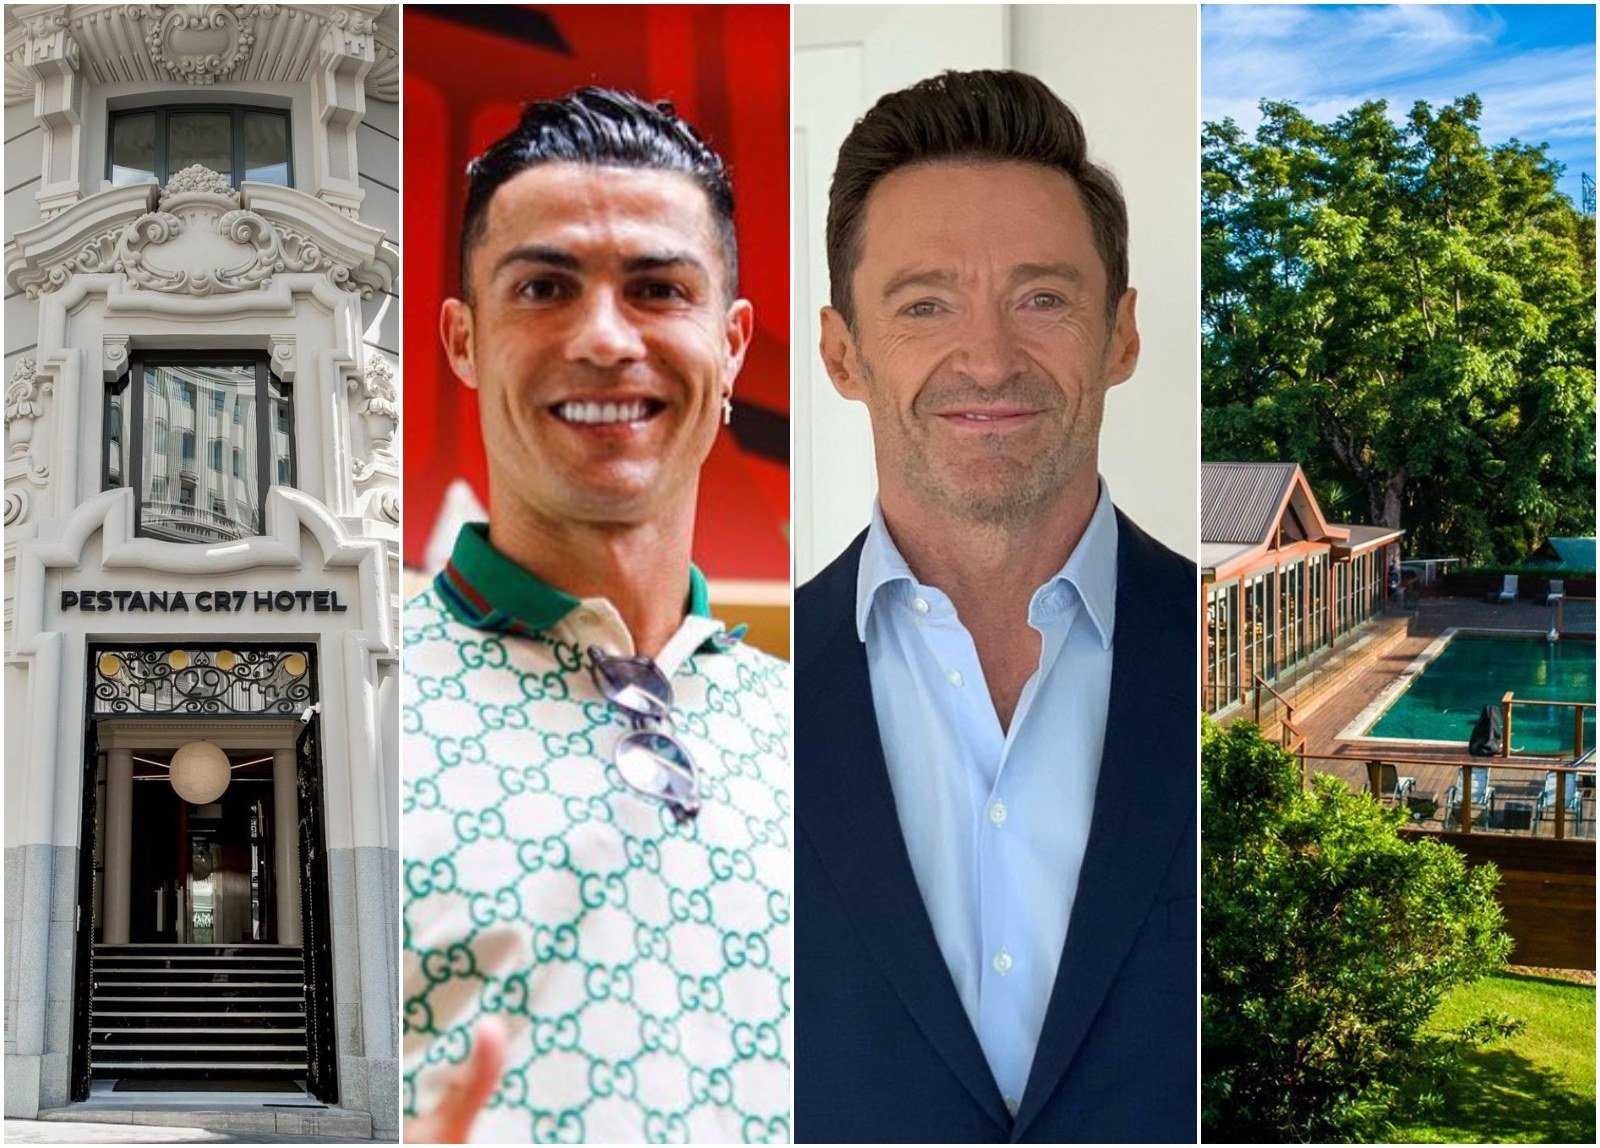 Cristiano Ronaldo has multiple properties with Pestana CR7 Hotel, while Hugh Jackman co-owns Australian wellness retreat, Gwinganna. Photos: @thehughjackman, @cristiano, @pestanacr7, @gwinganna/Instagram